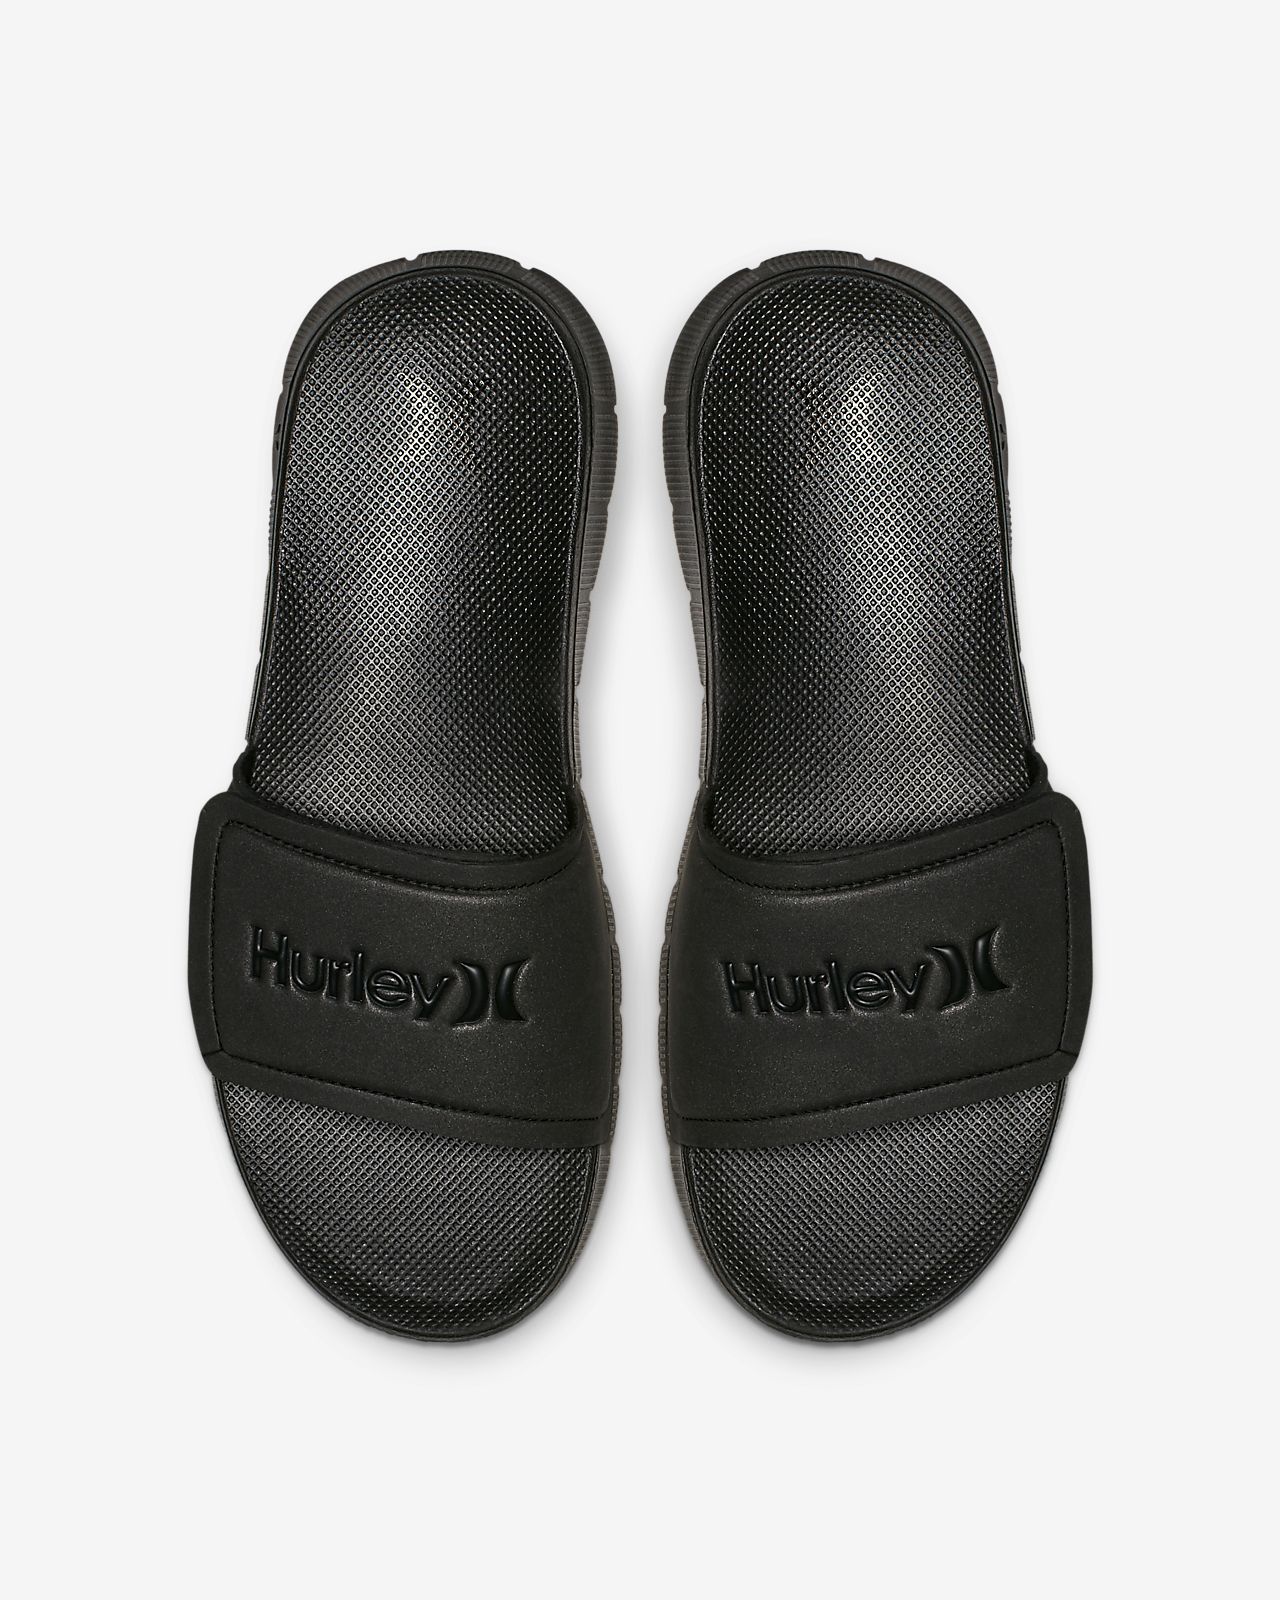 Hurley Fusion Slide Sandalias - Hombre. Nike ES